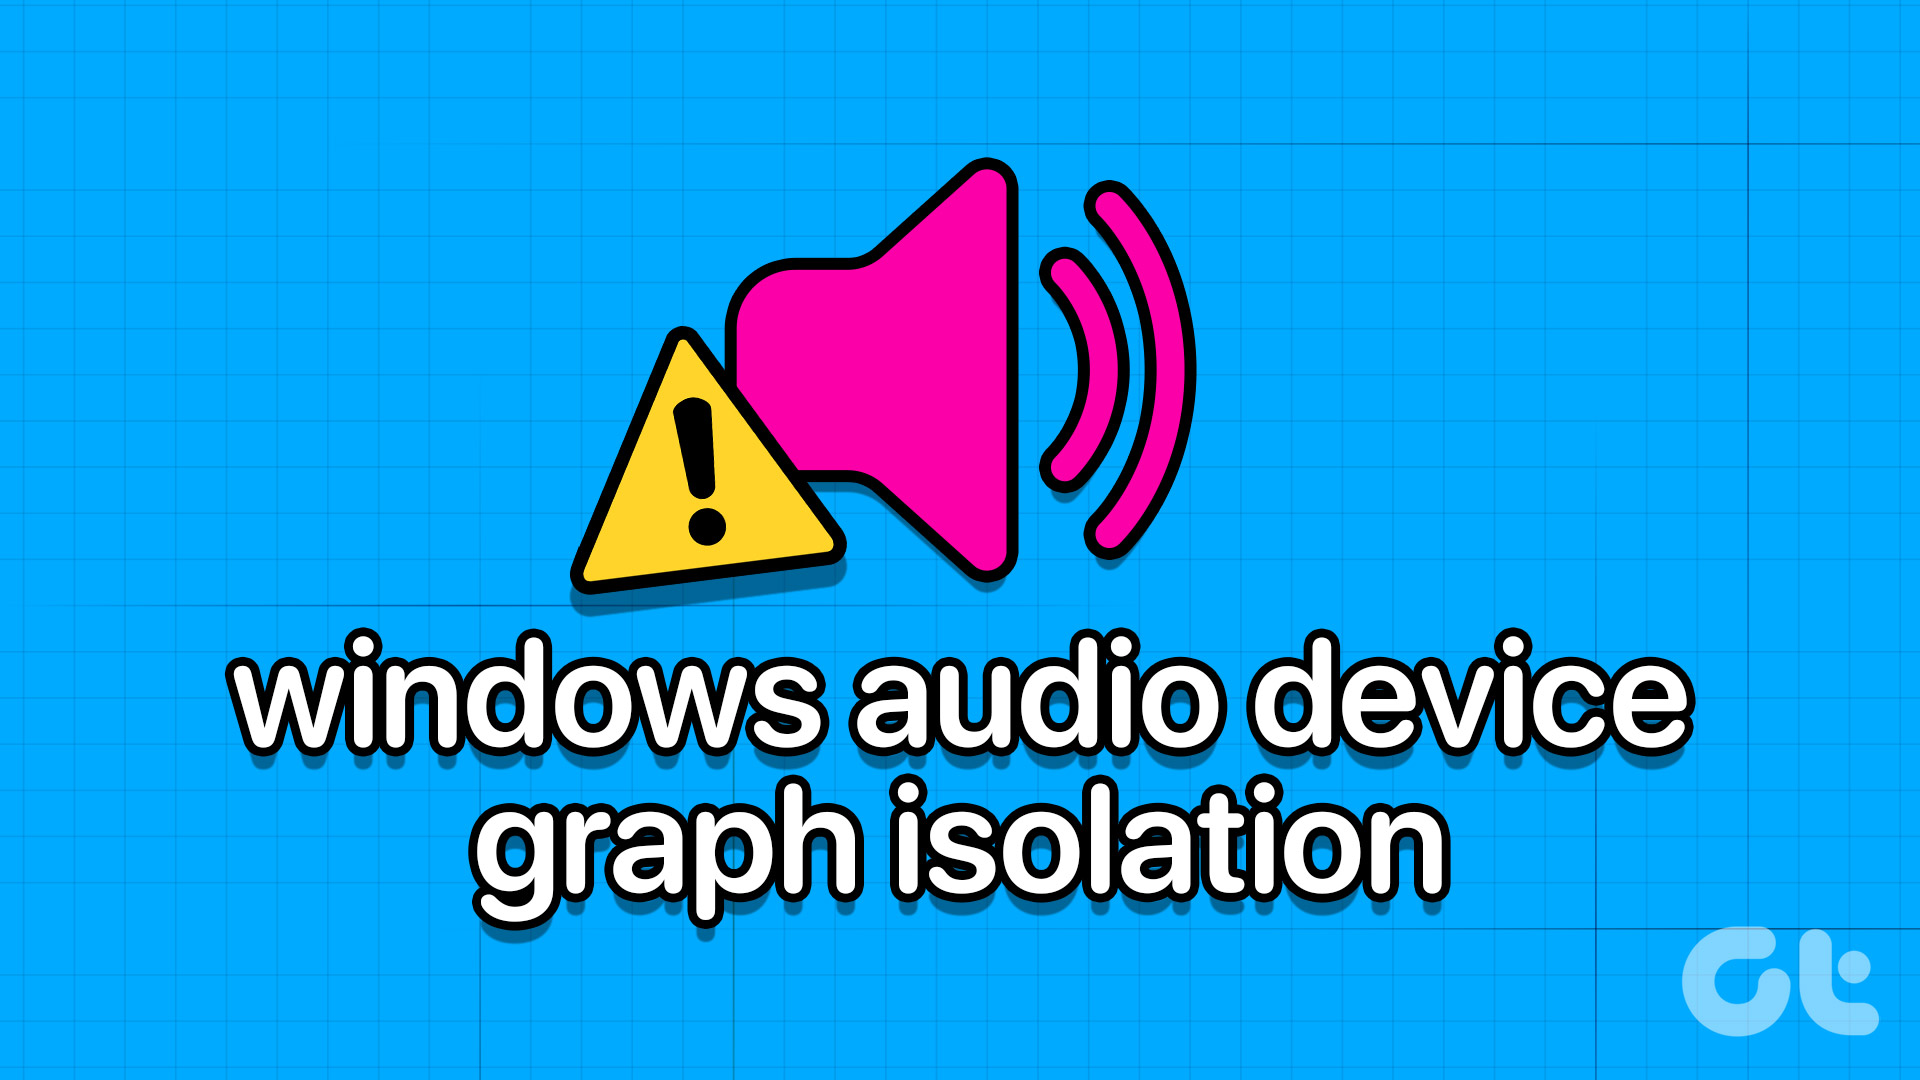 Windows audio device graph isolation